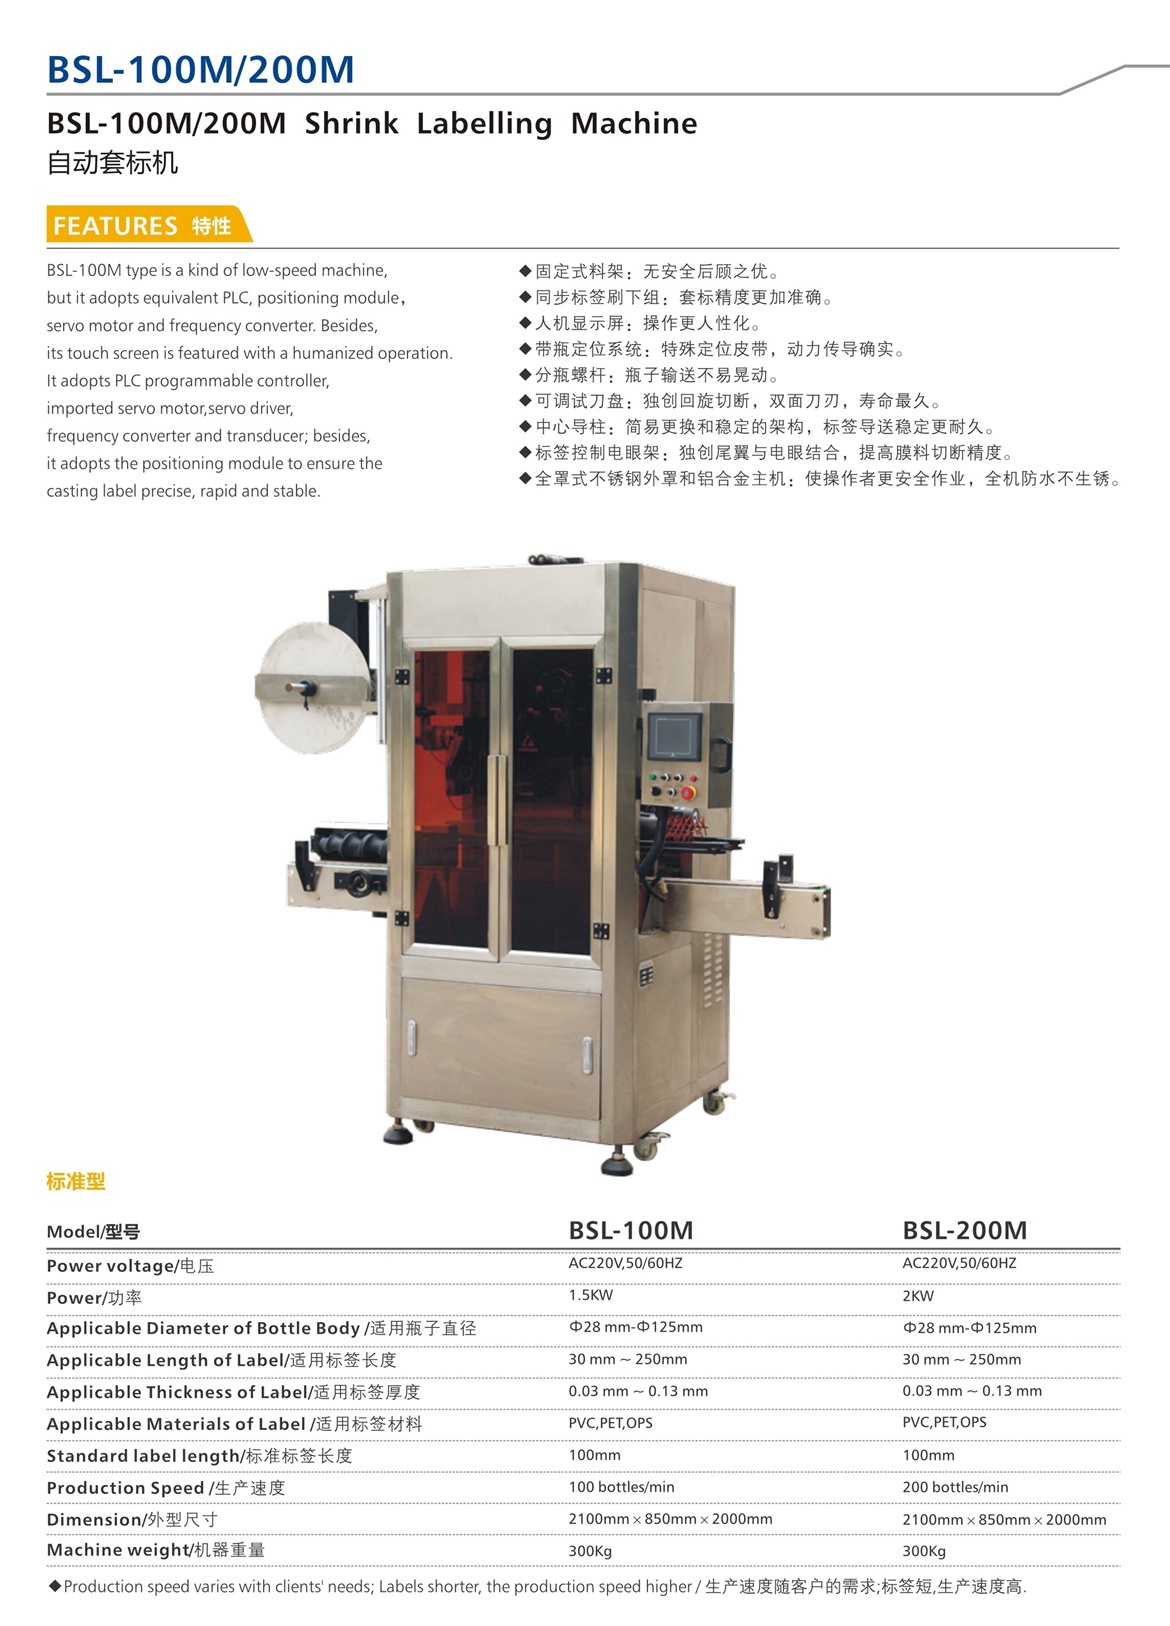 Shrink Labelling Machine BSL-100M/200M